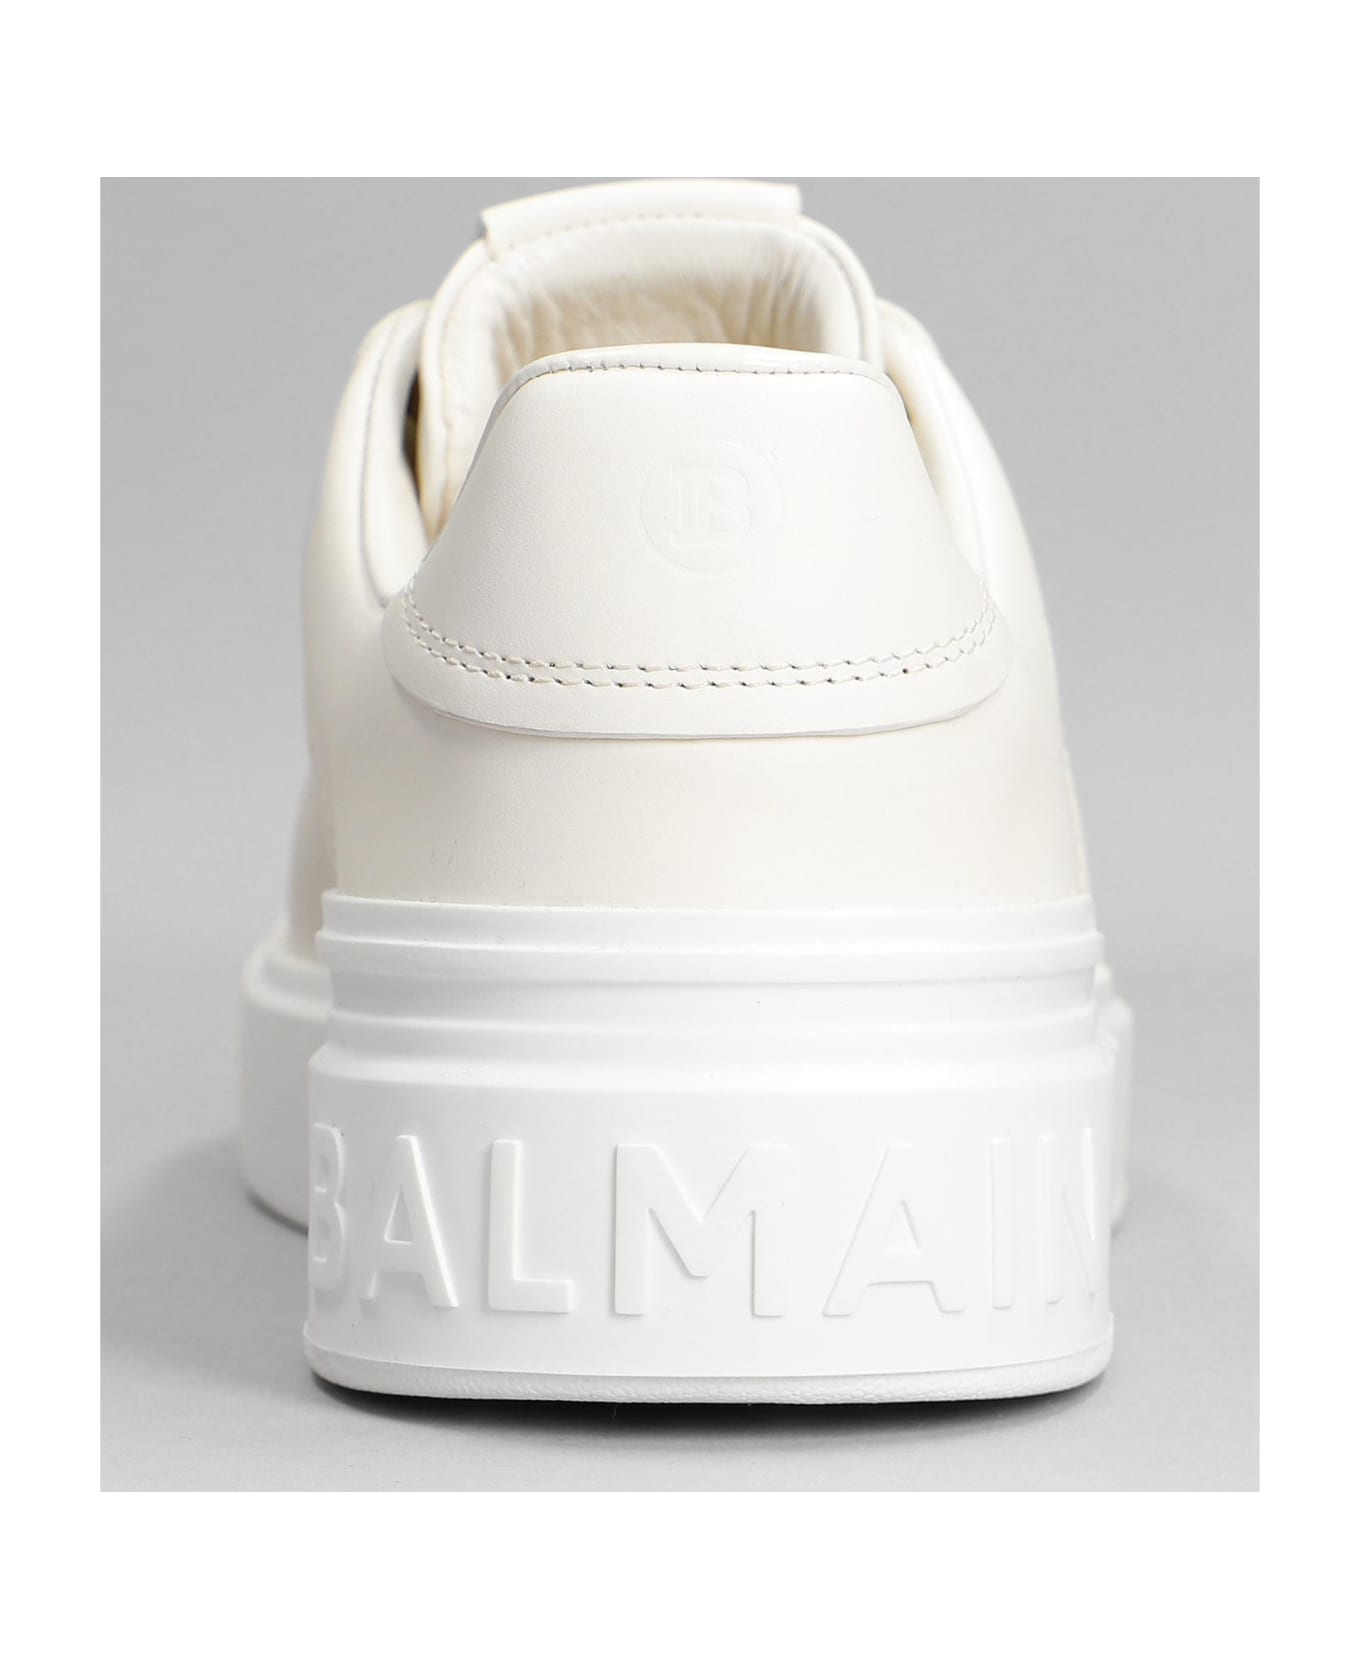 Balmain B Court Sneakers In White Leather - white